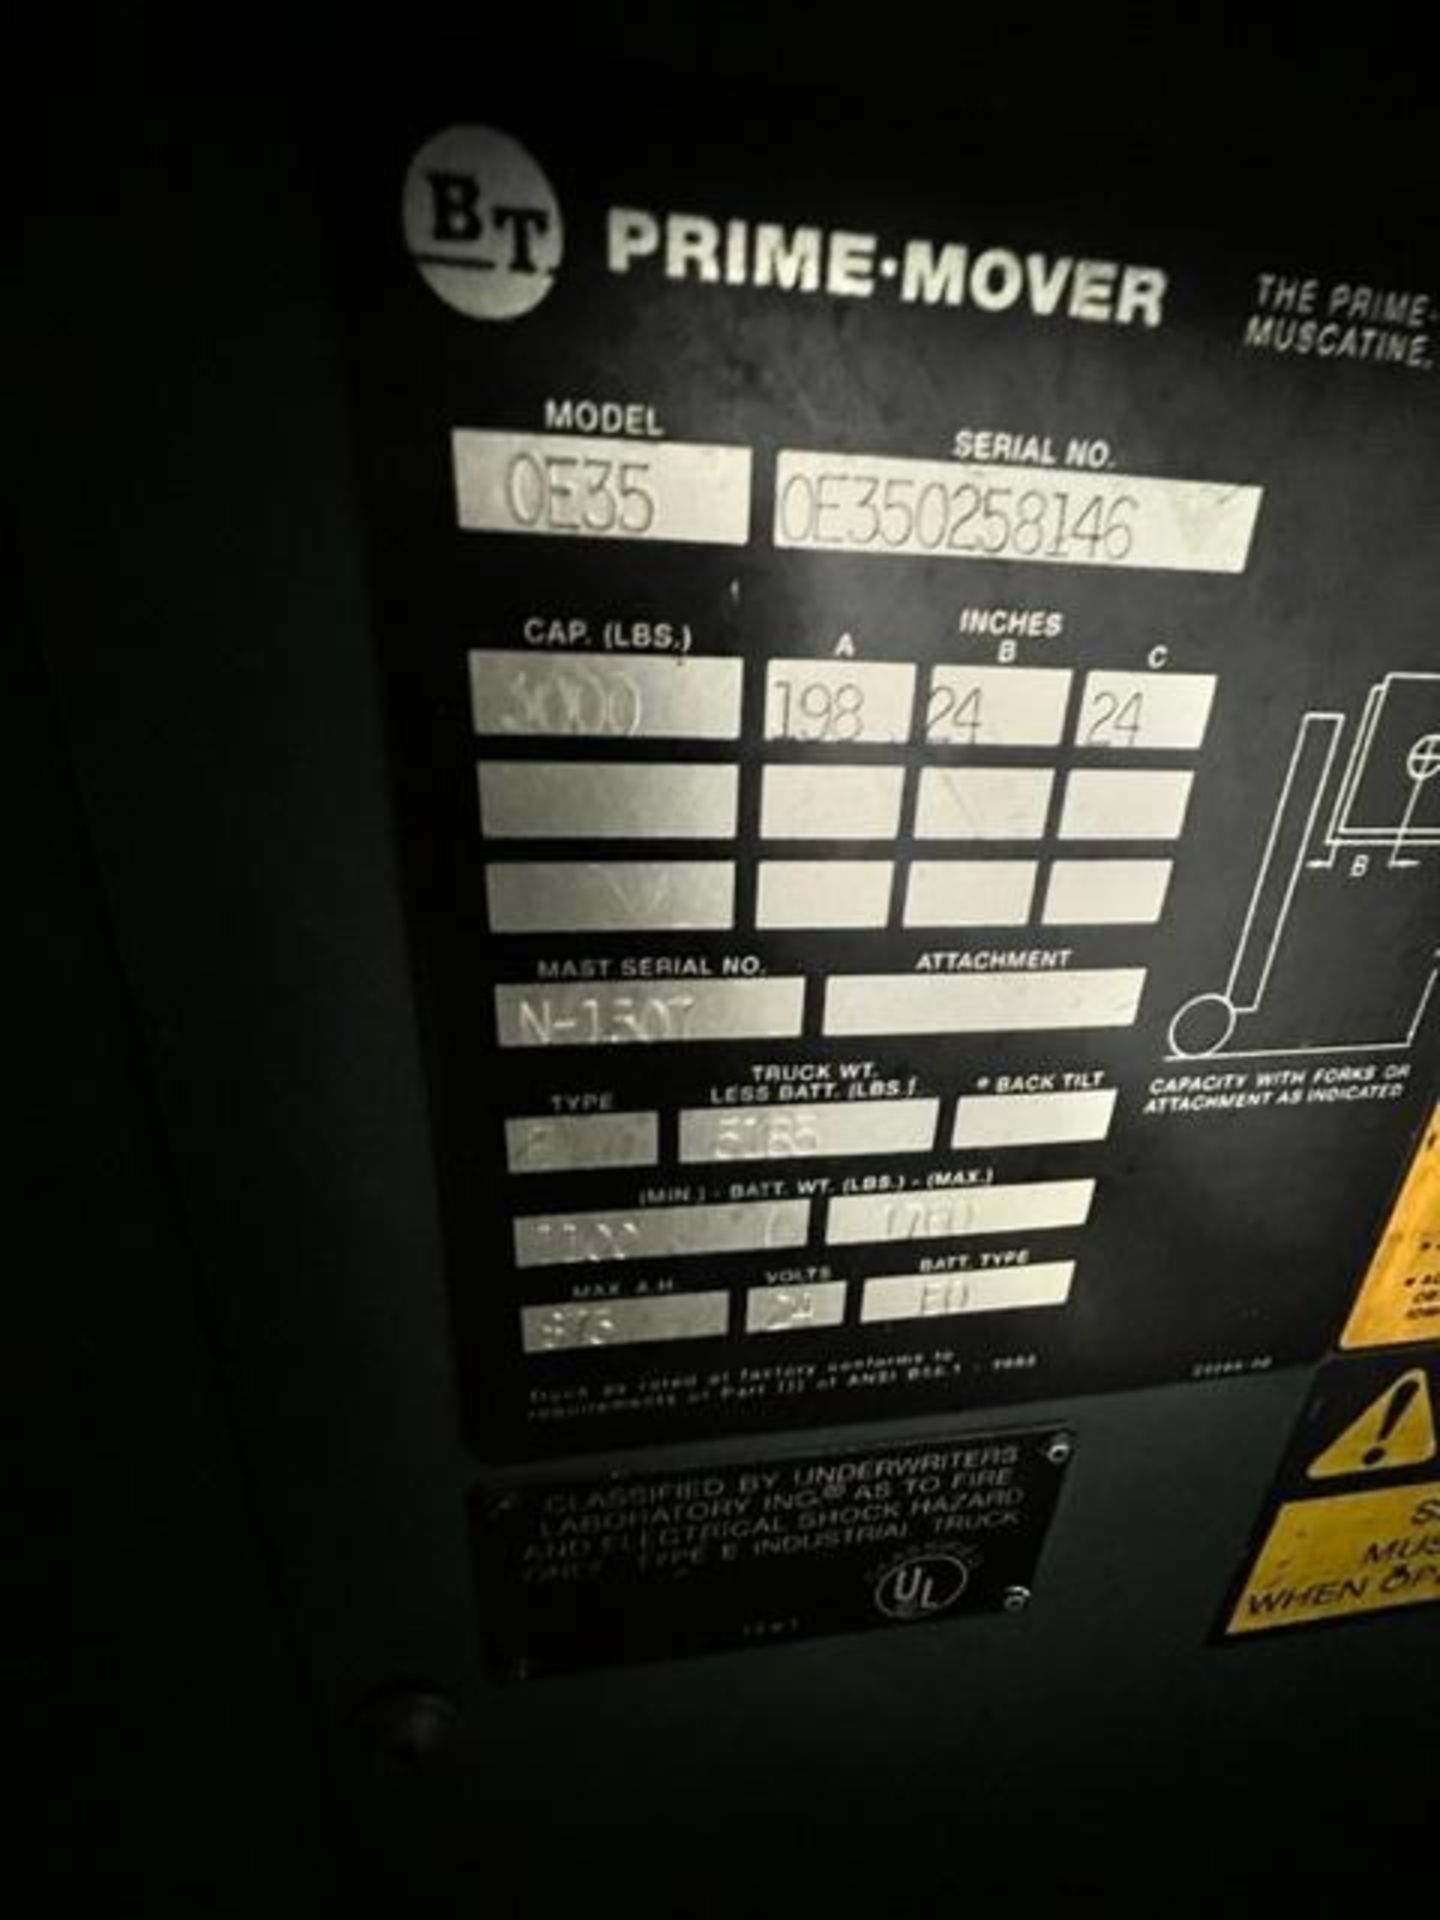 BT Prime Mover 3,000 LB. Electric Order Picker, Model 0E35, S/N 0E350258146, w/ Battery Mate 24V Cha - Image 5 of 7